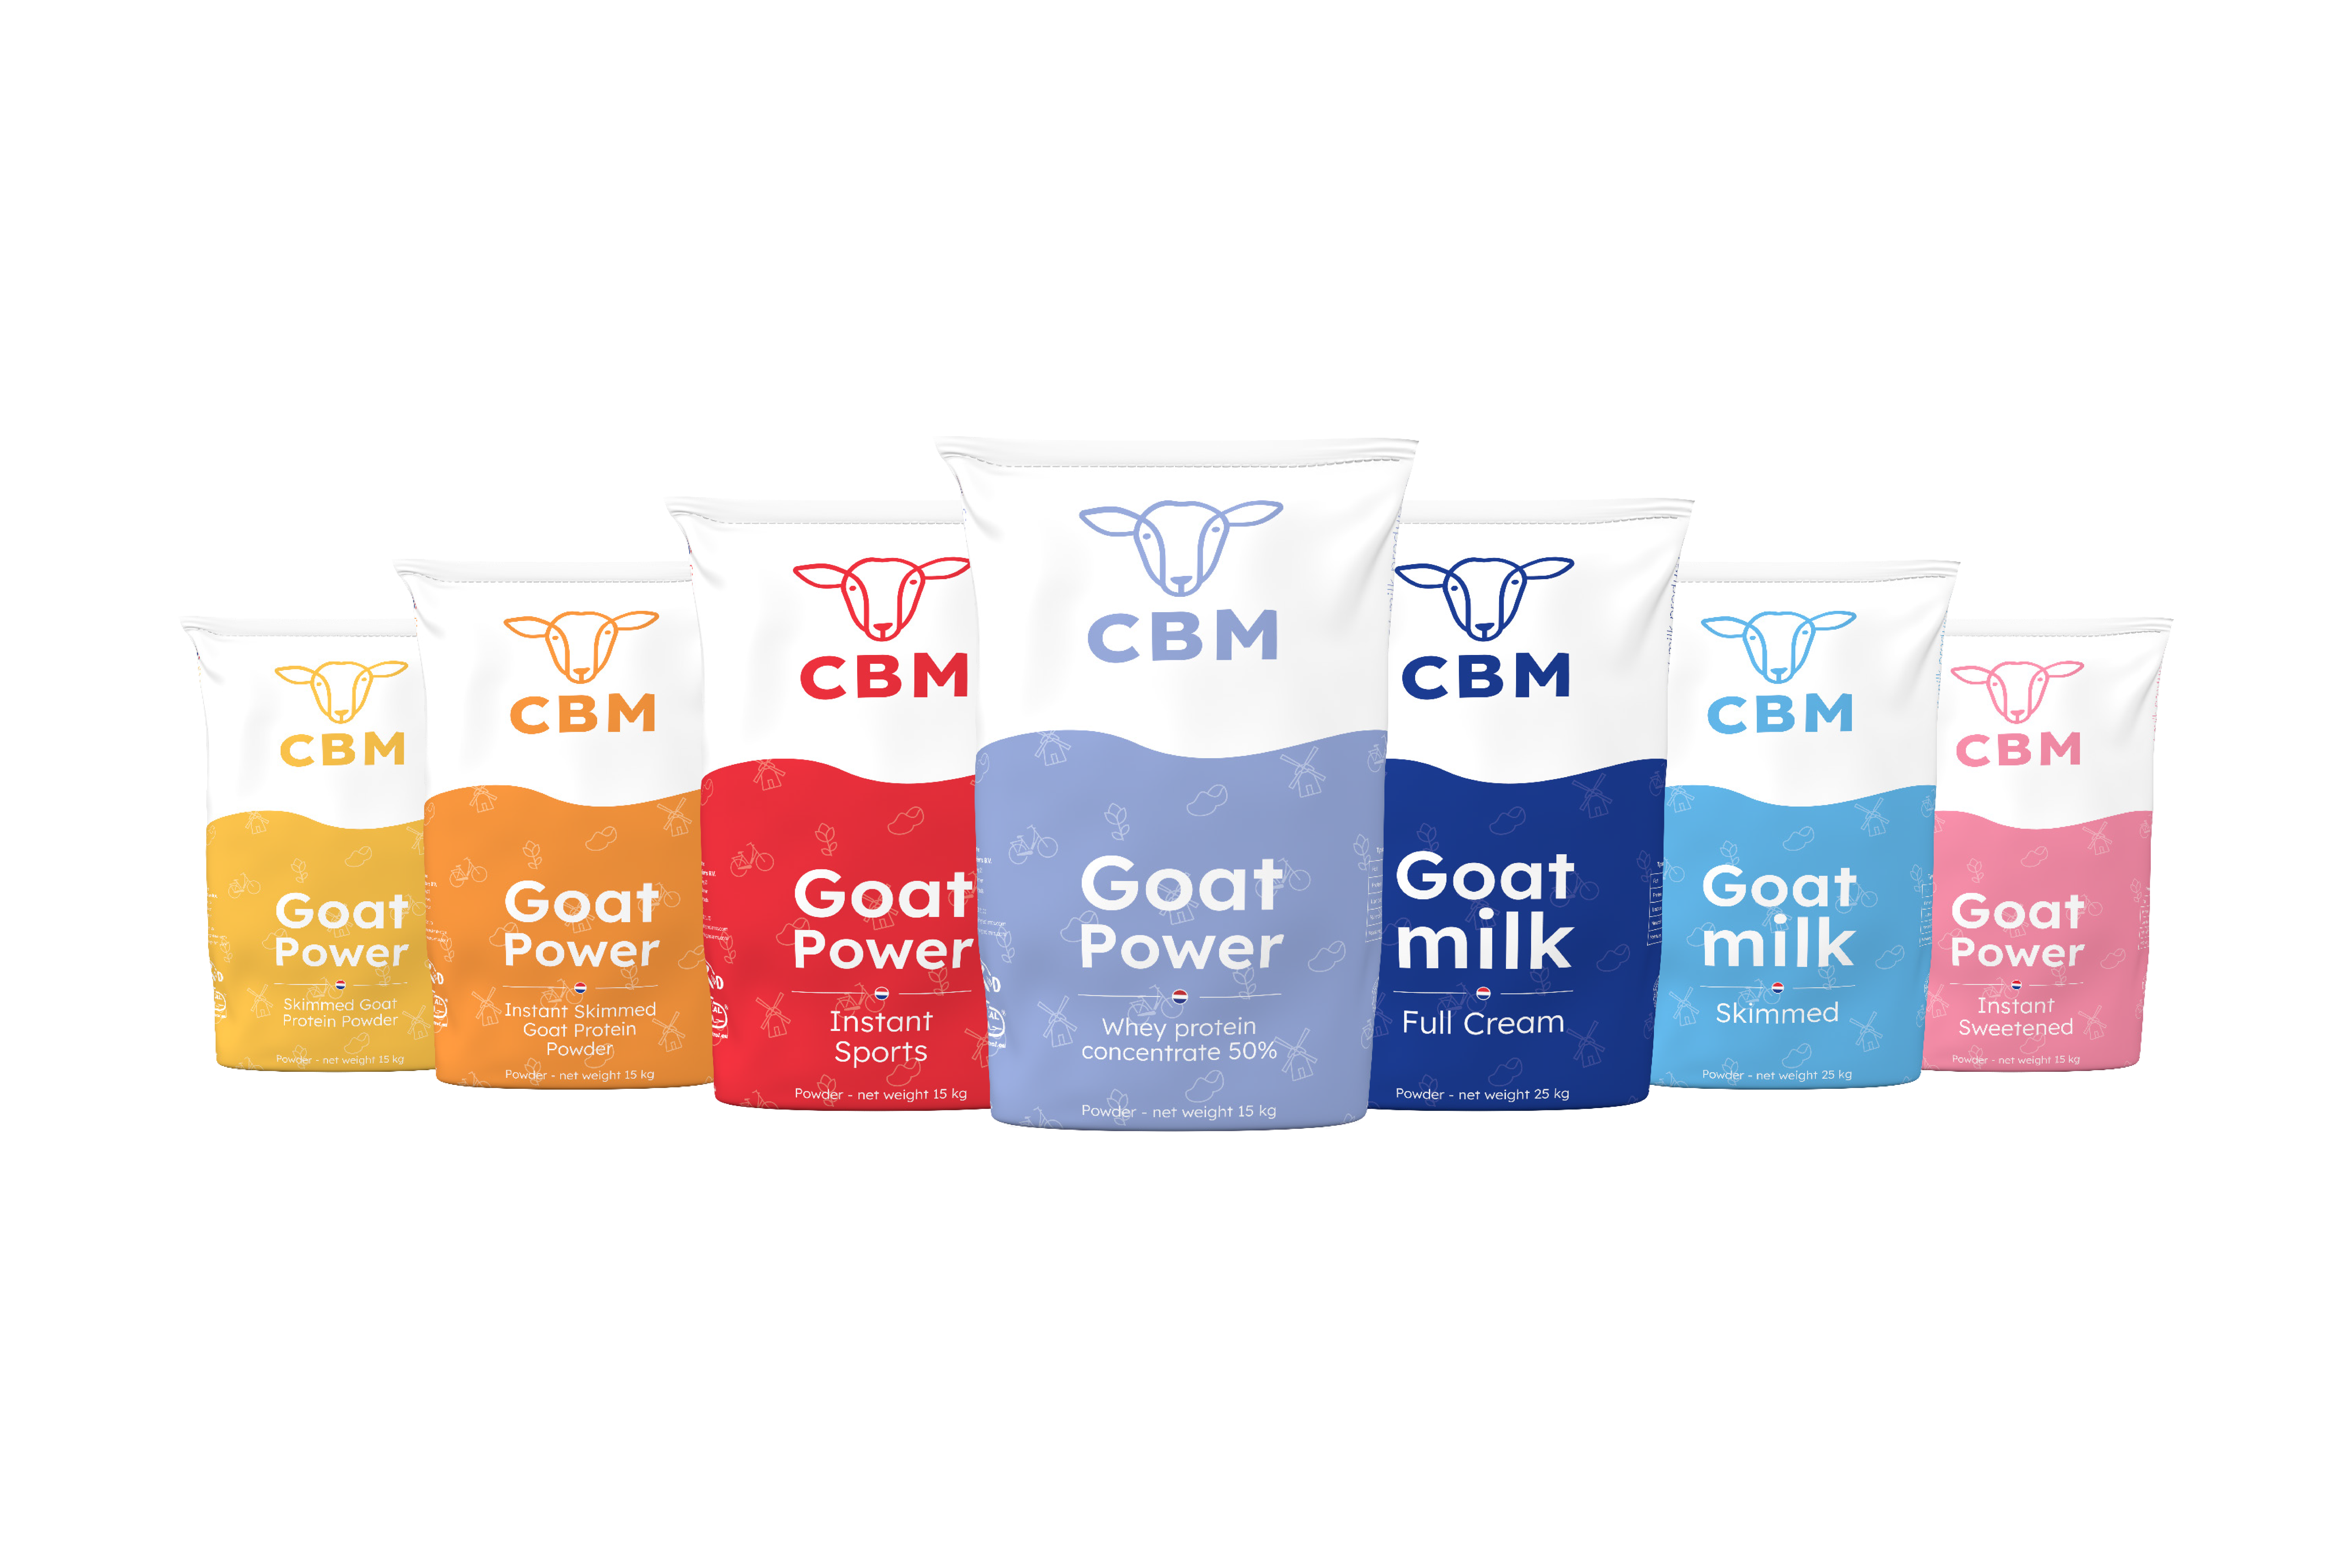  Packaging of goat milk from CBM